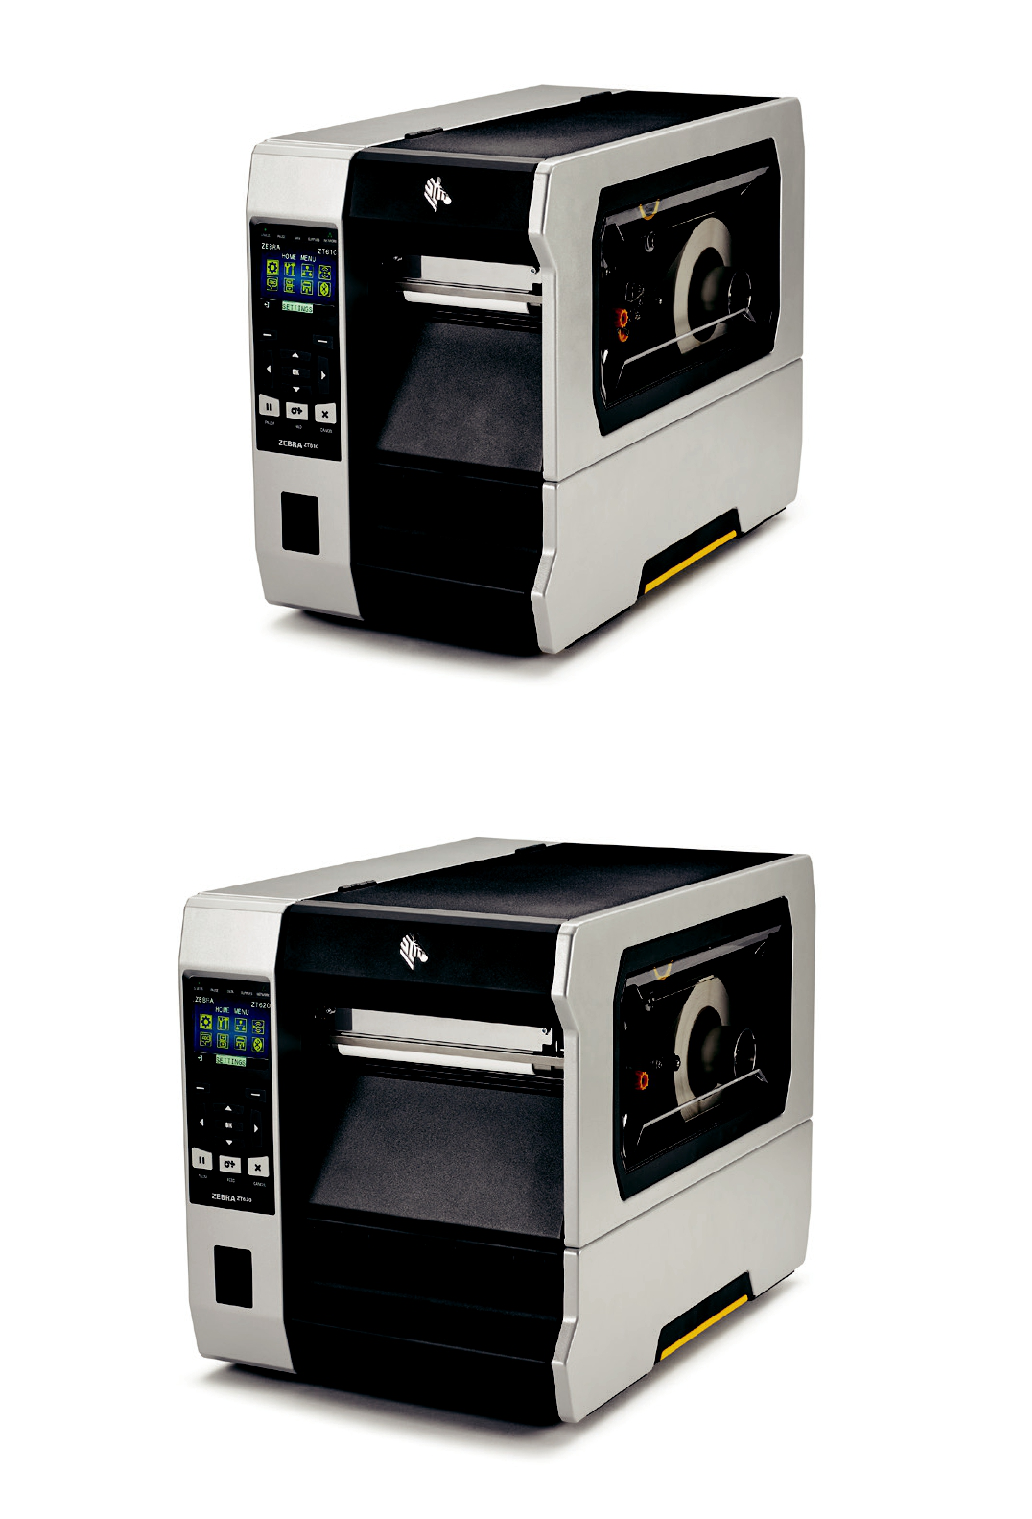 Zebra ZT600 系列工业打印机 ZT610 与 ZT620条码打印机参数对比